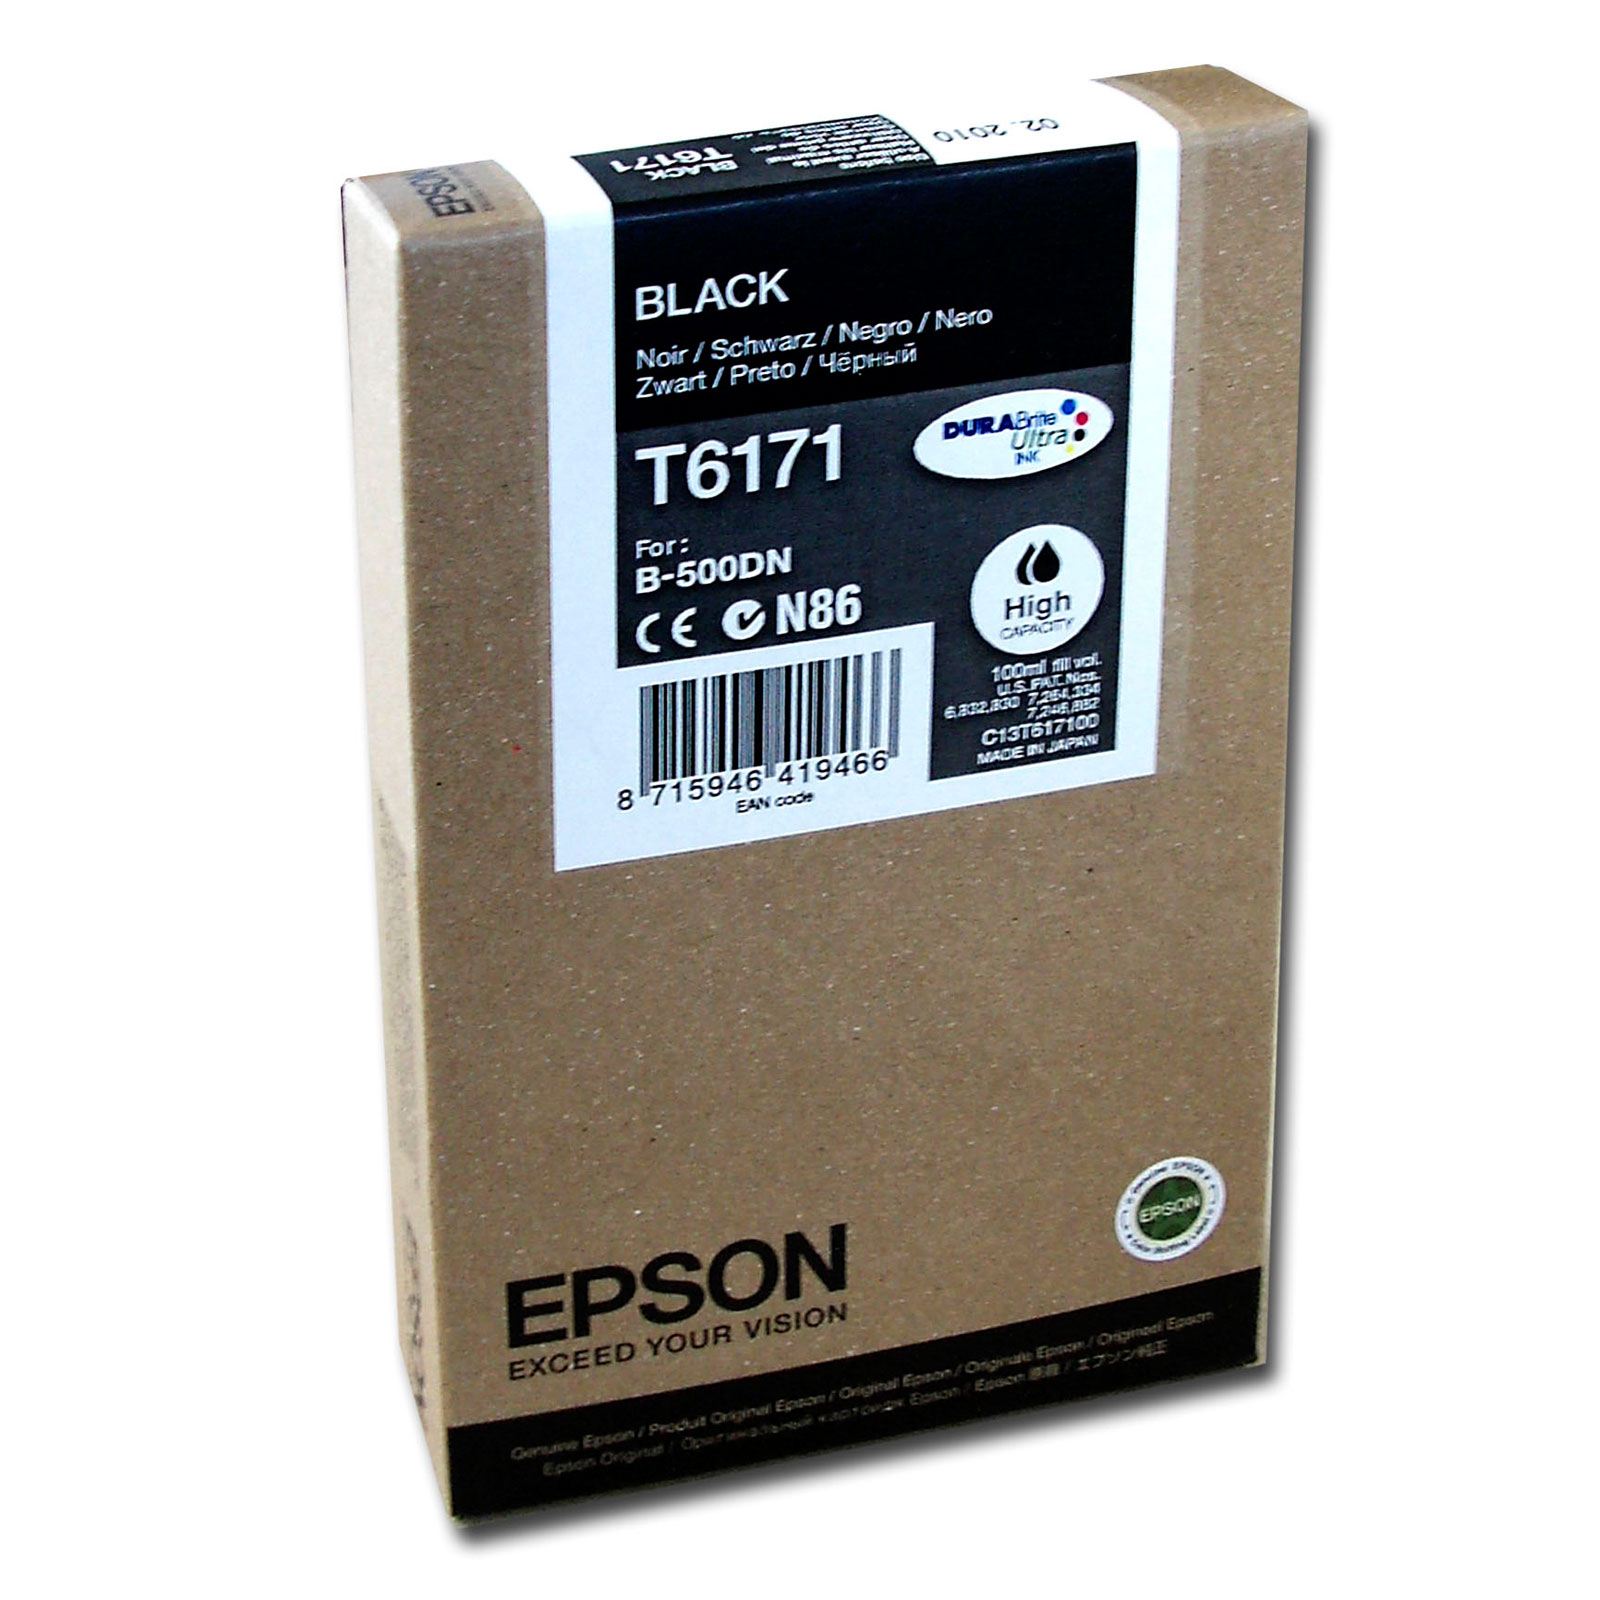 Чернильный картридж Epson B500DN/B510DN, Black, 4000стр.